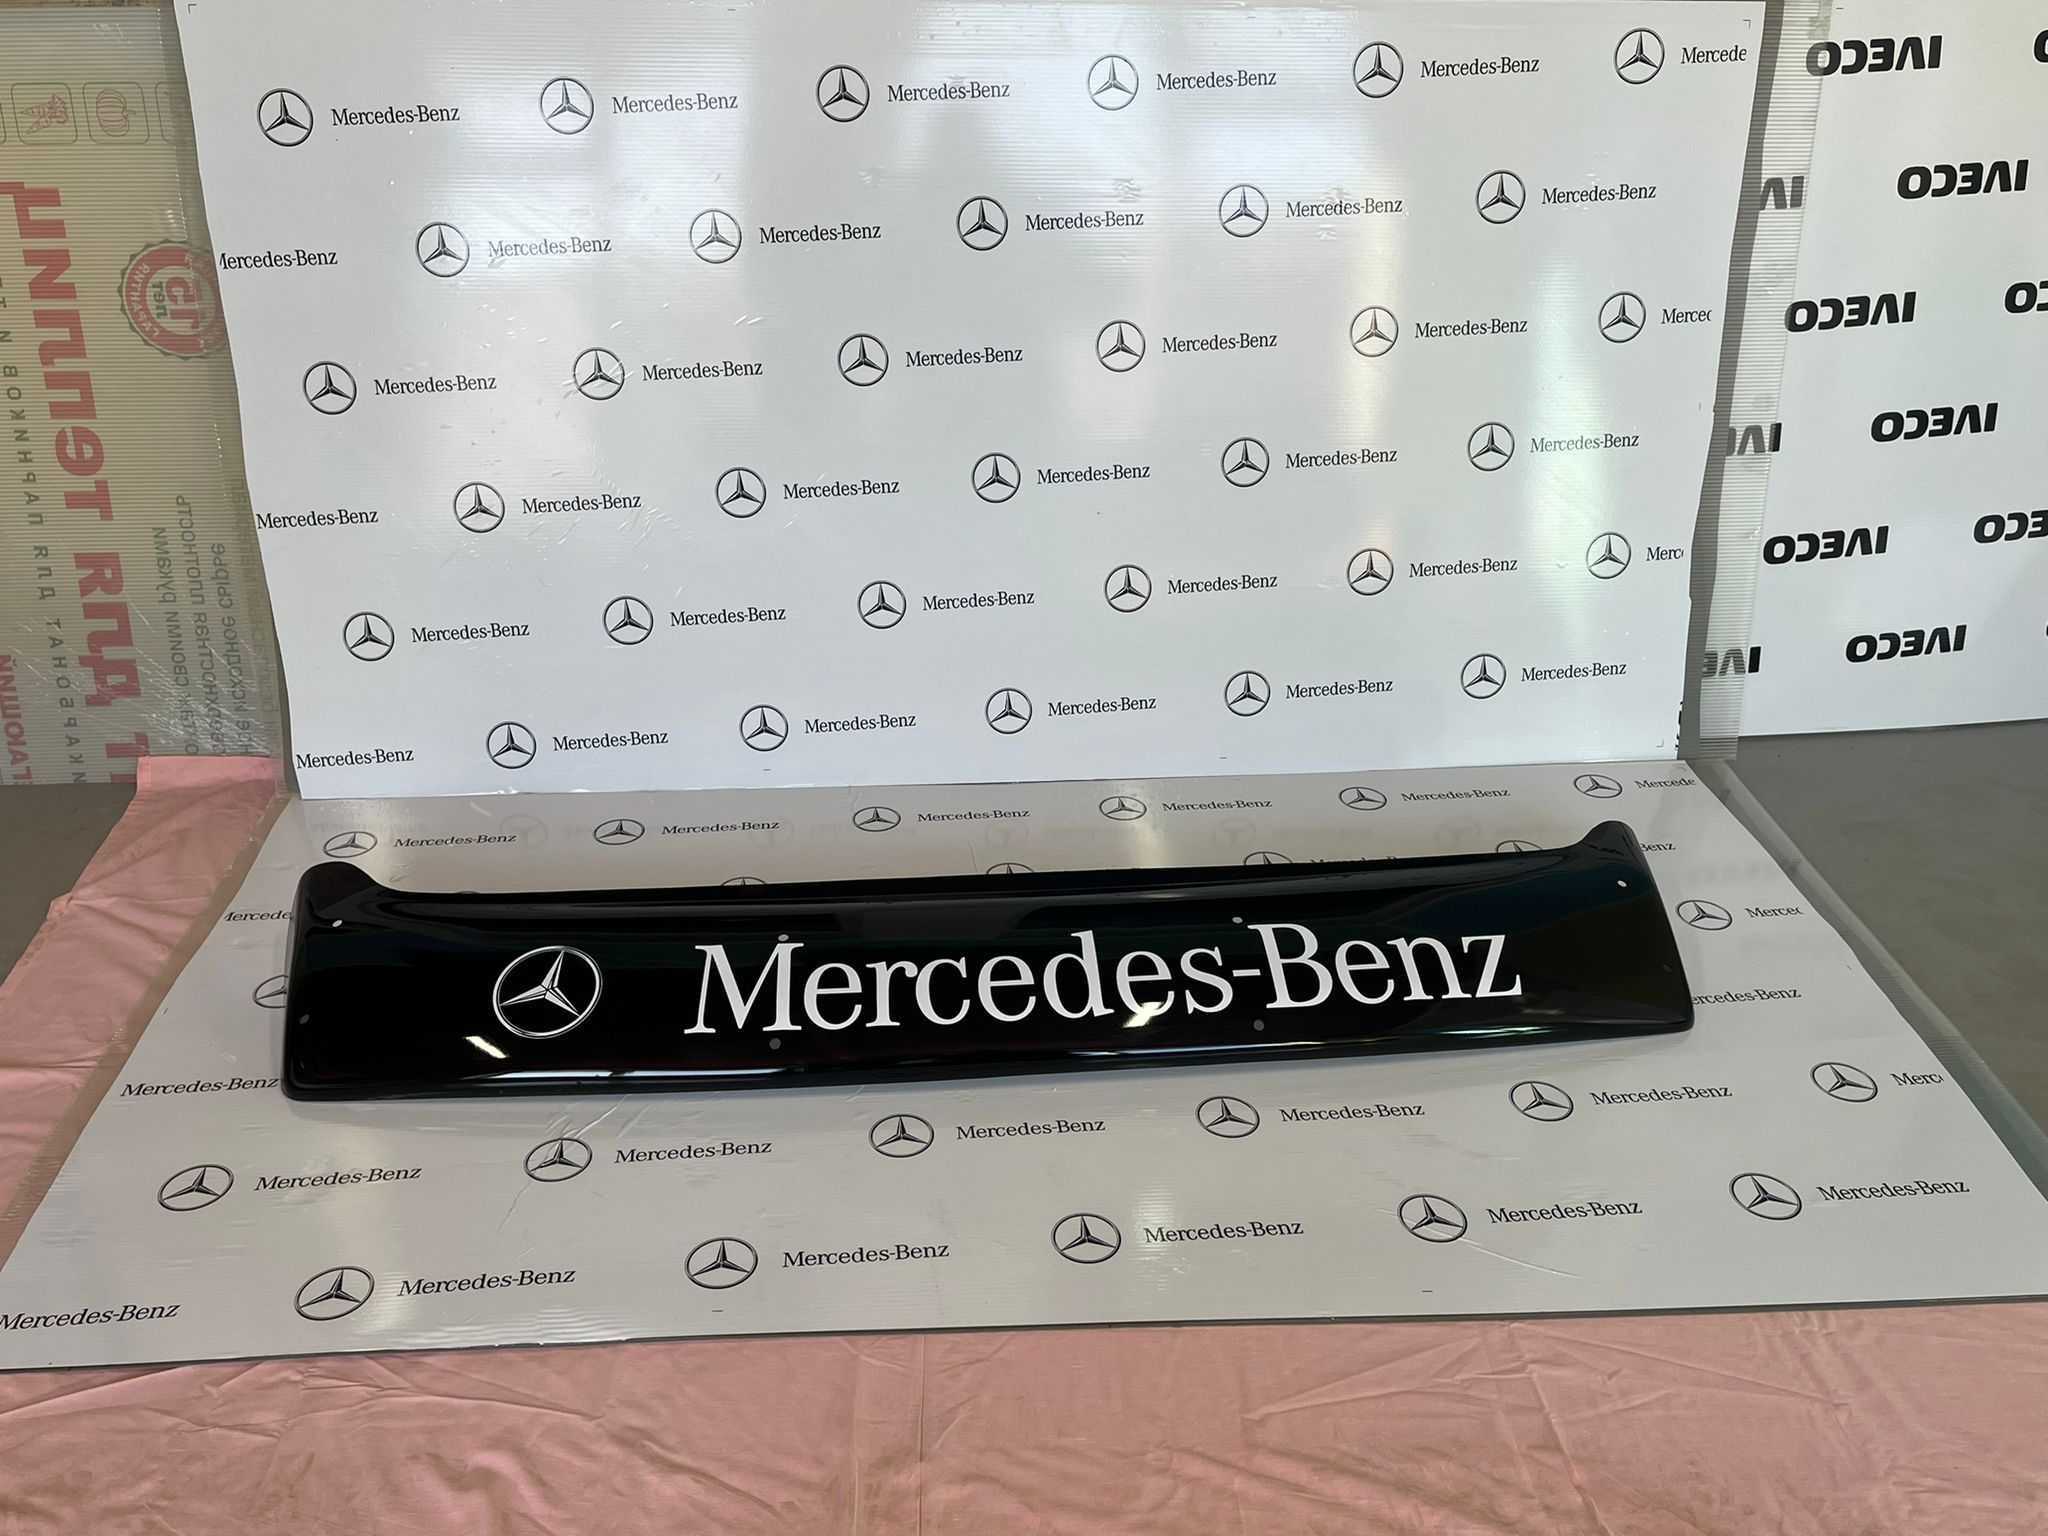 Parasolar Mercedes Sprinter NOU Inscriptionat
550 lei